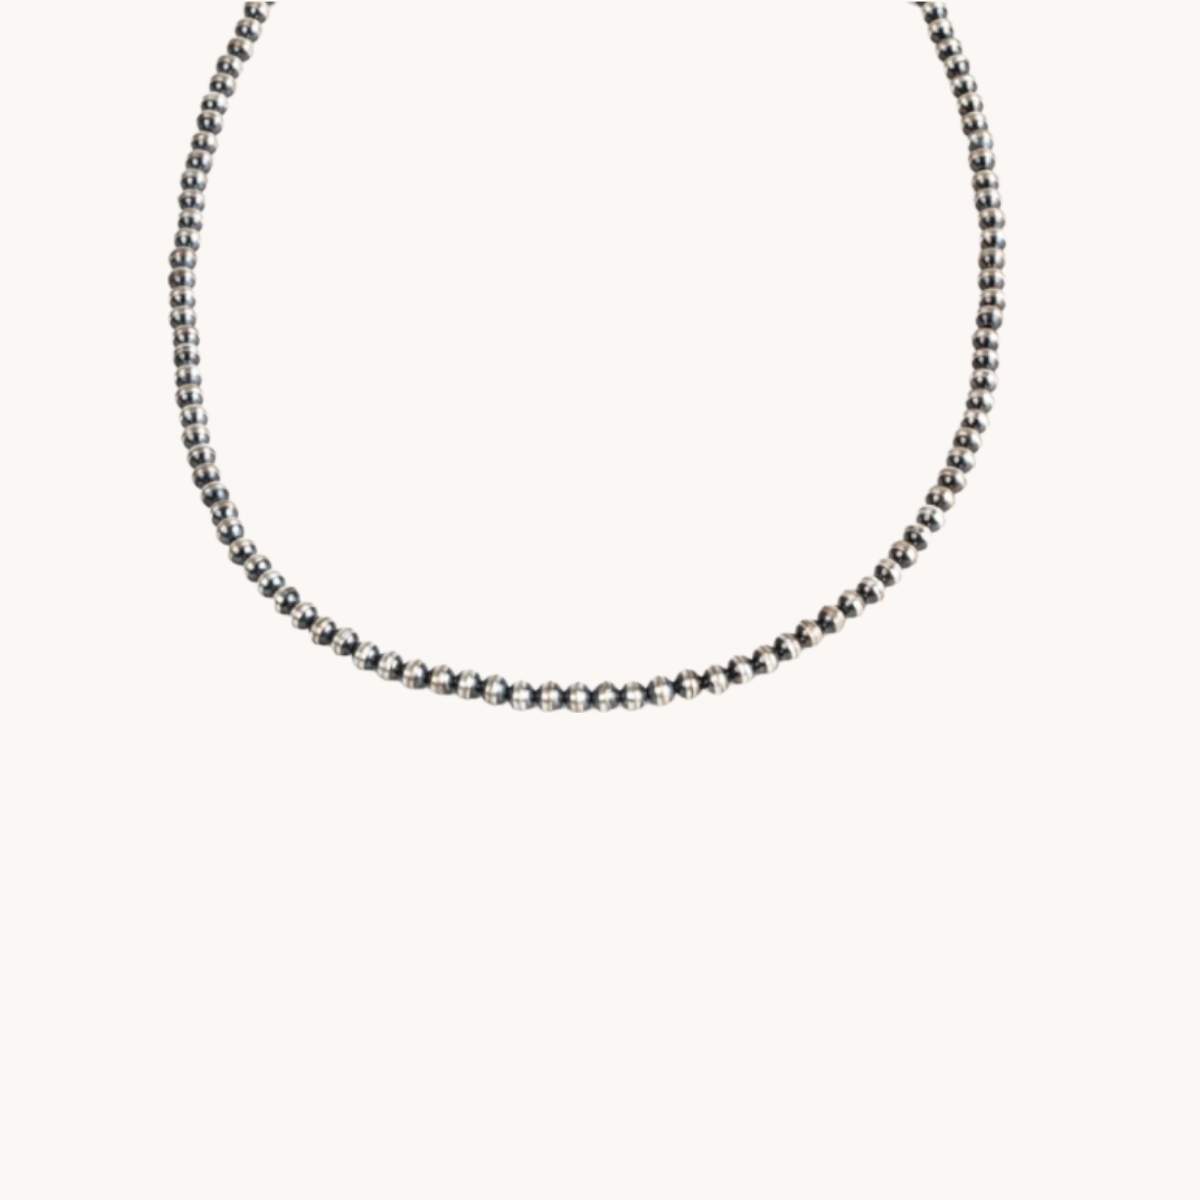 Minimalist Pearls Necklace | T.Skies Jewelry